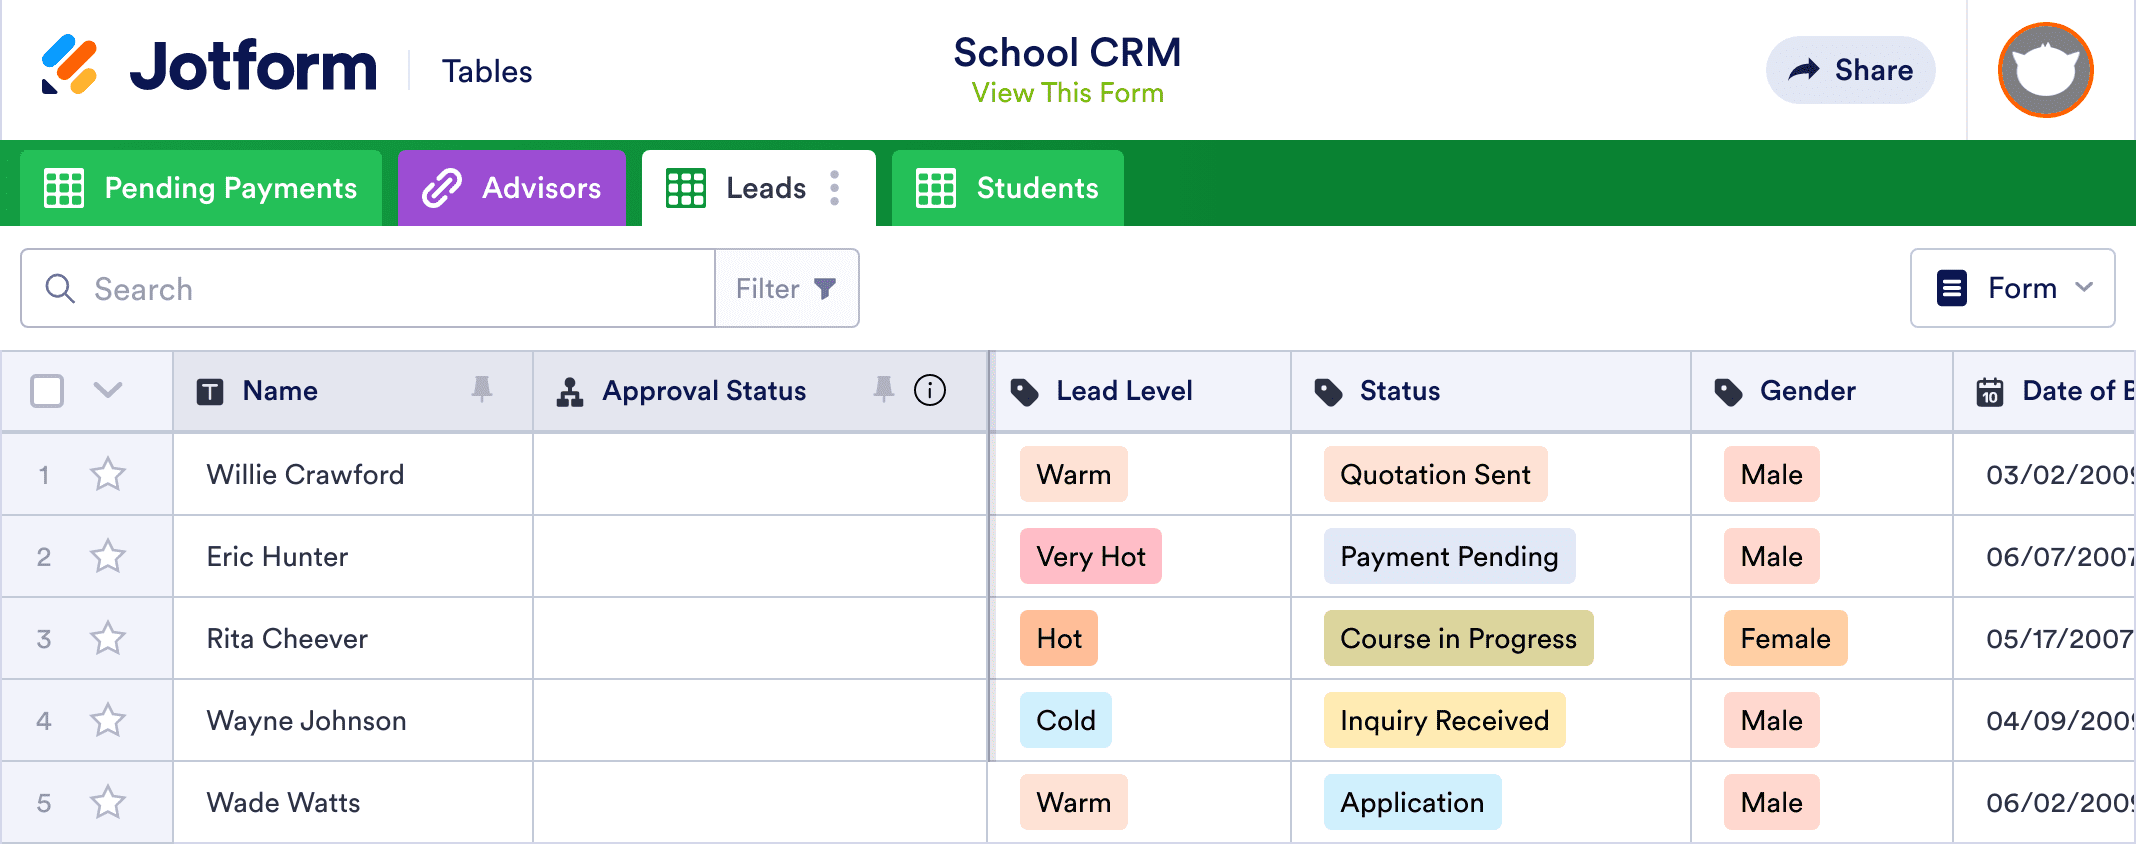 School CRM Template | Jotform Tables